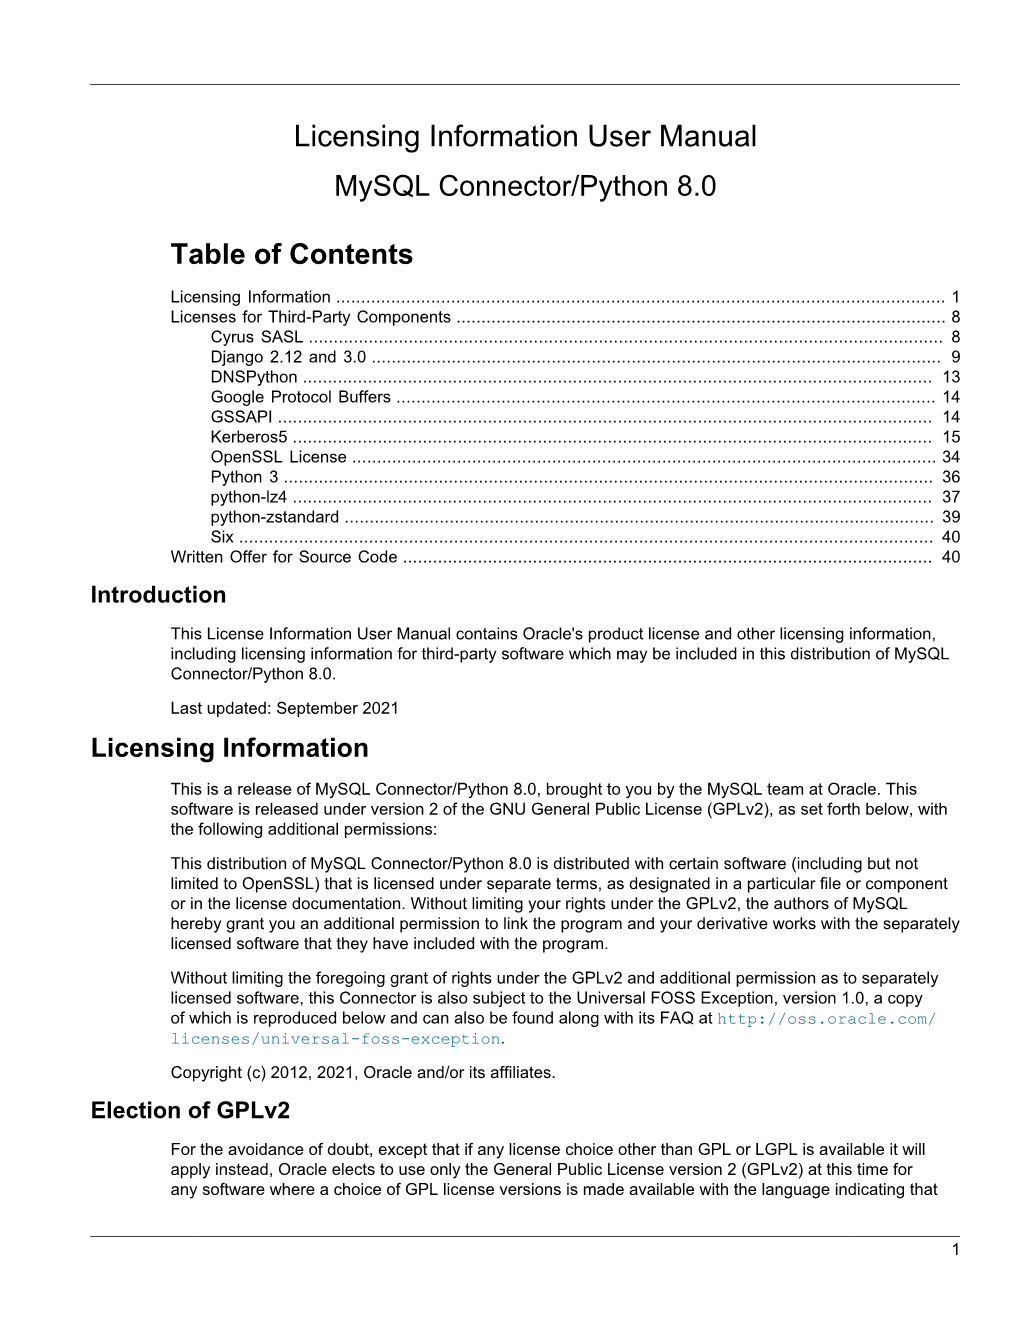 Mysql Connector/Python 8.0 Community License Information User